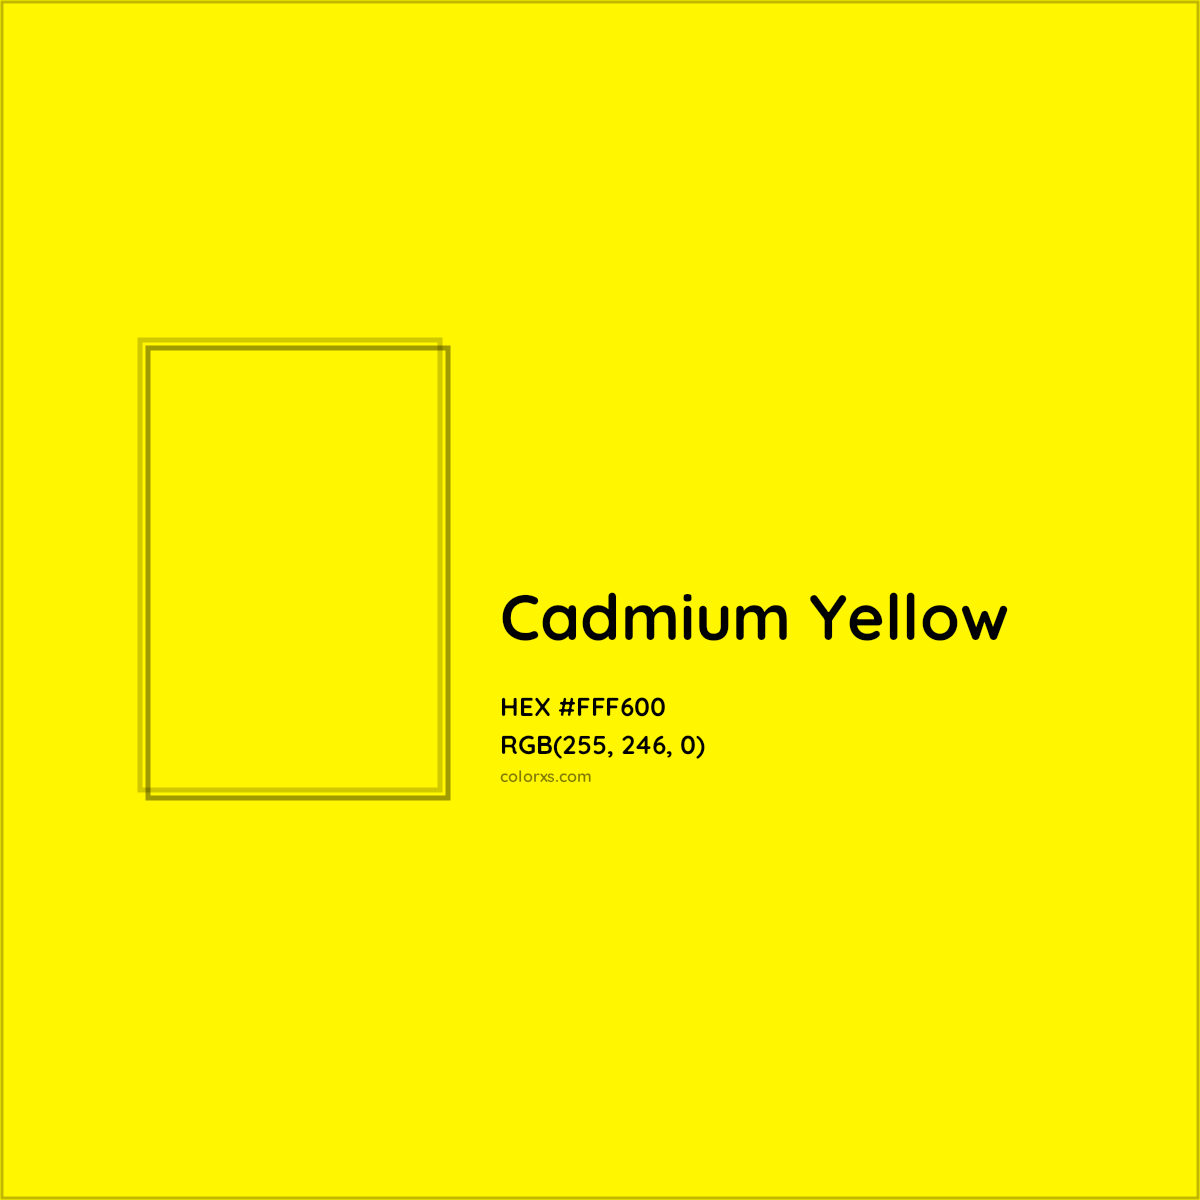 HEX #FFF600 Cadmium Yellow Color - Color Code